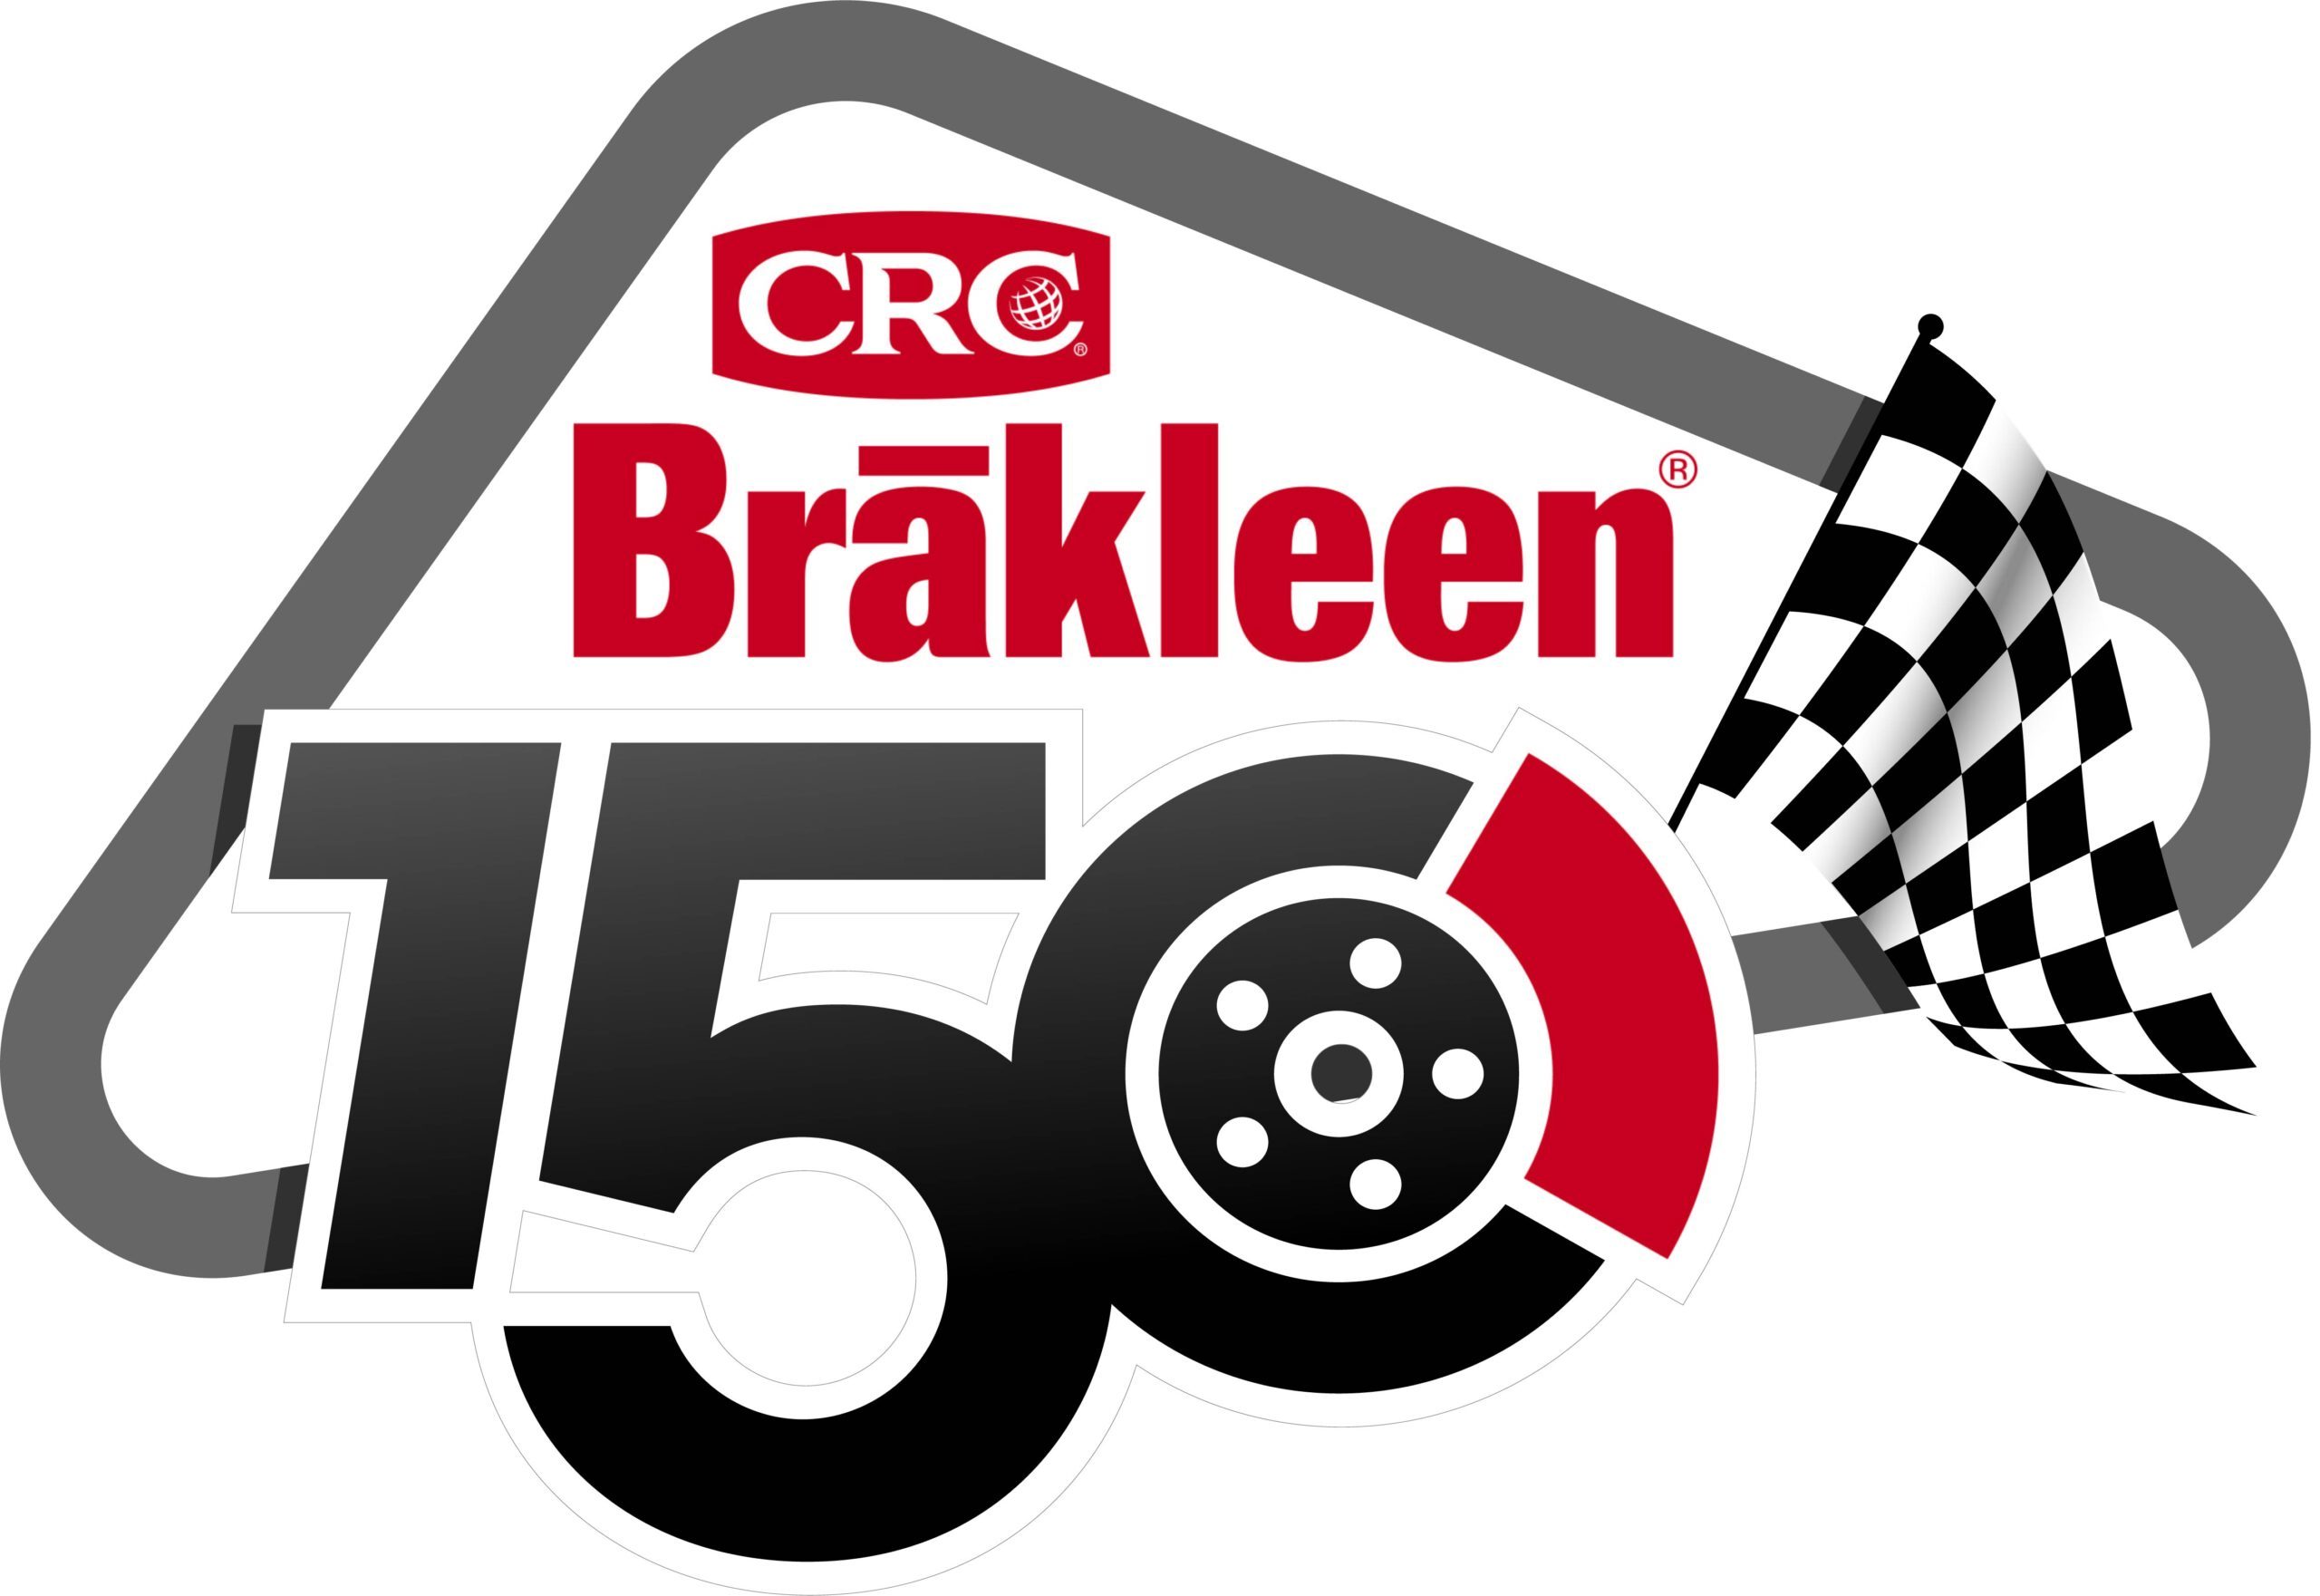 Carson Hocevar – CRC Brakleen 150 Race Advance